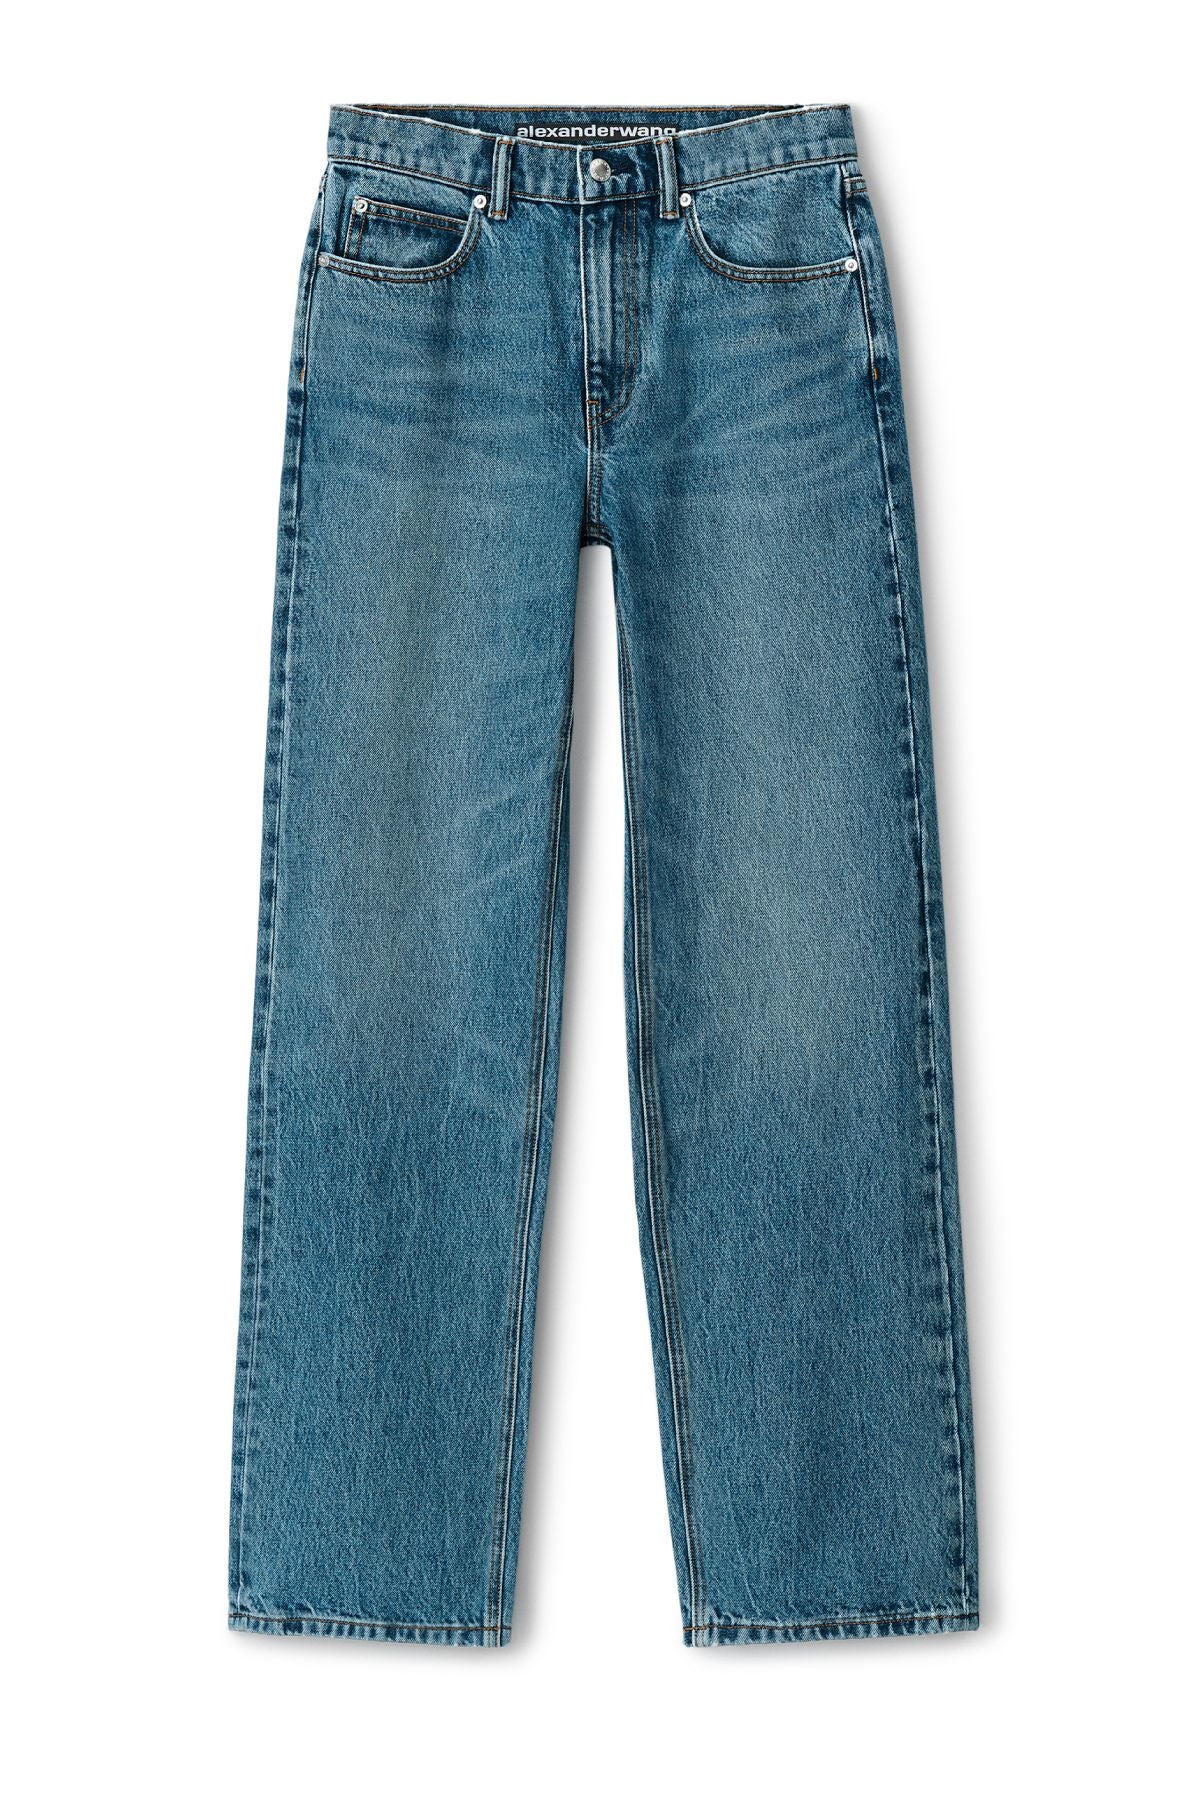 Alexander Wang EZ Mid Rise Relaxed Straight Jeans - Vintage Medium Indigo